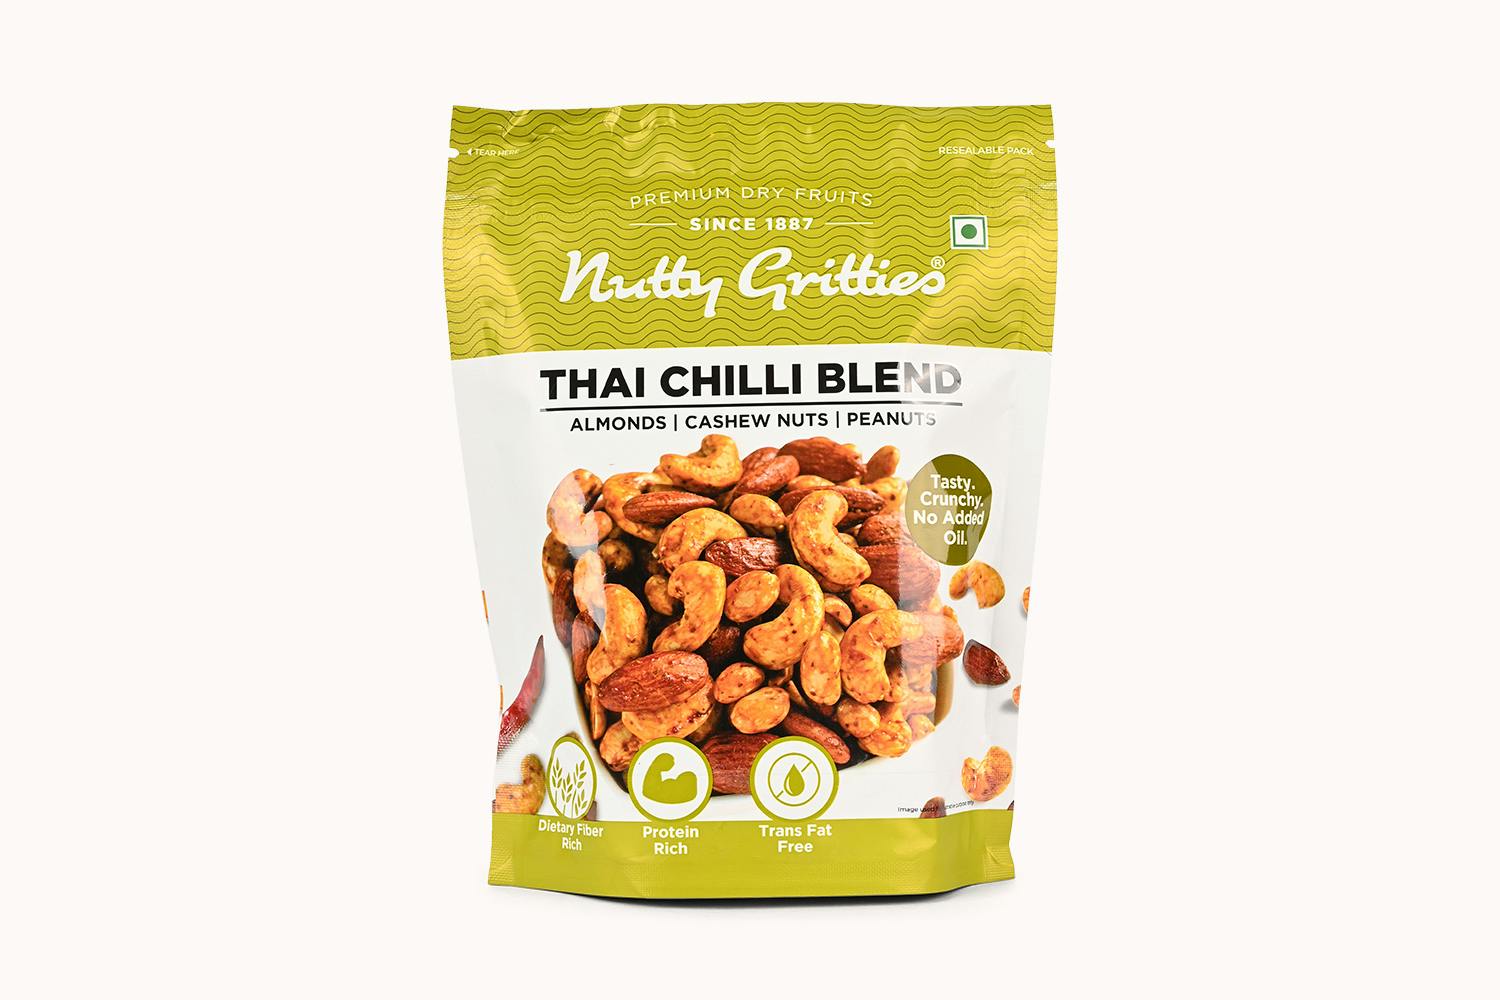 Nutty Gritties Thai Chilli Blend Trail Mix